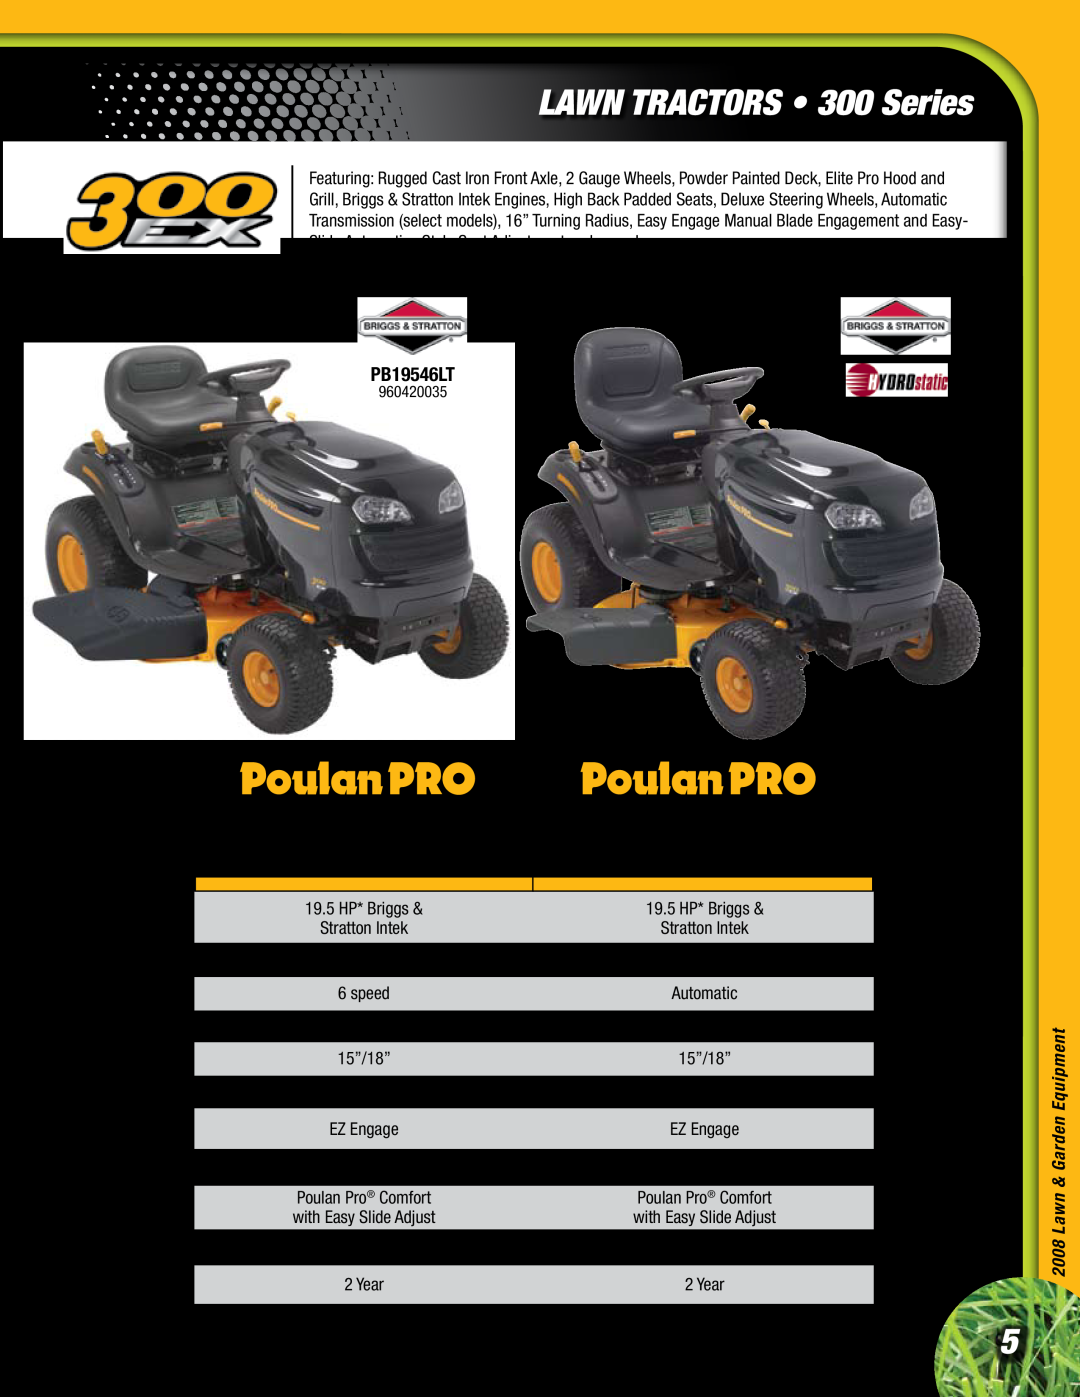 Poulan Lawn & Garden Tractor manual LAWN TRACTORS 300 Series, PB19546LT, PB195H42LT, Lawn Tractor, Warranty 